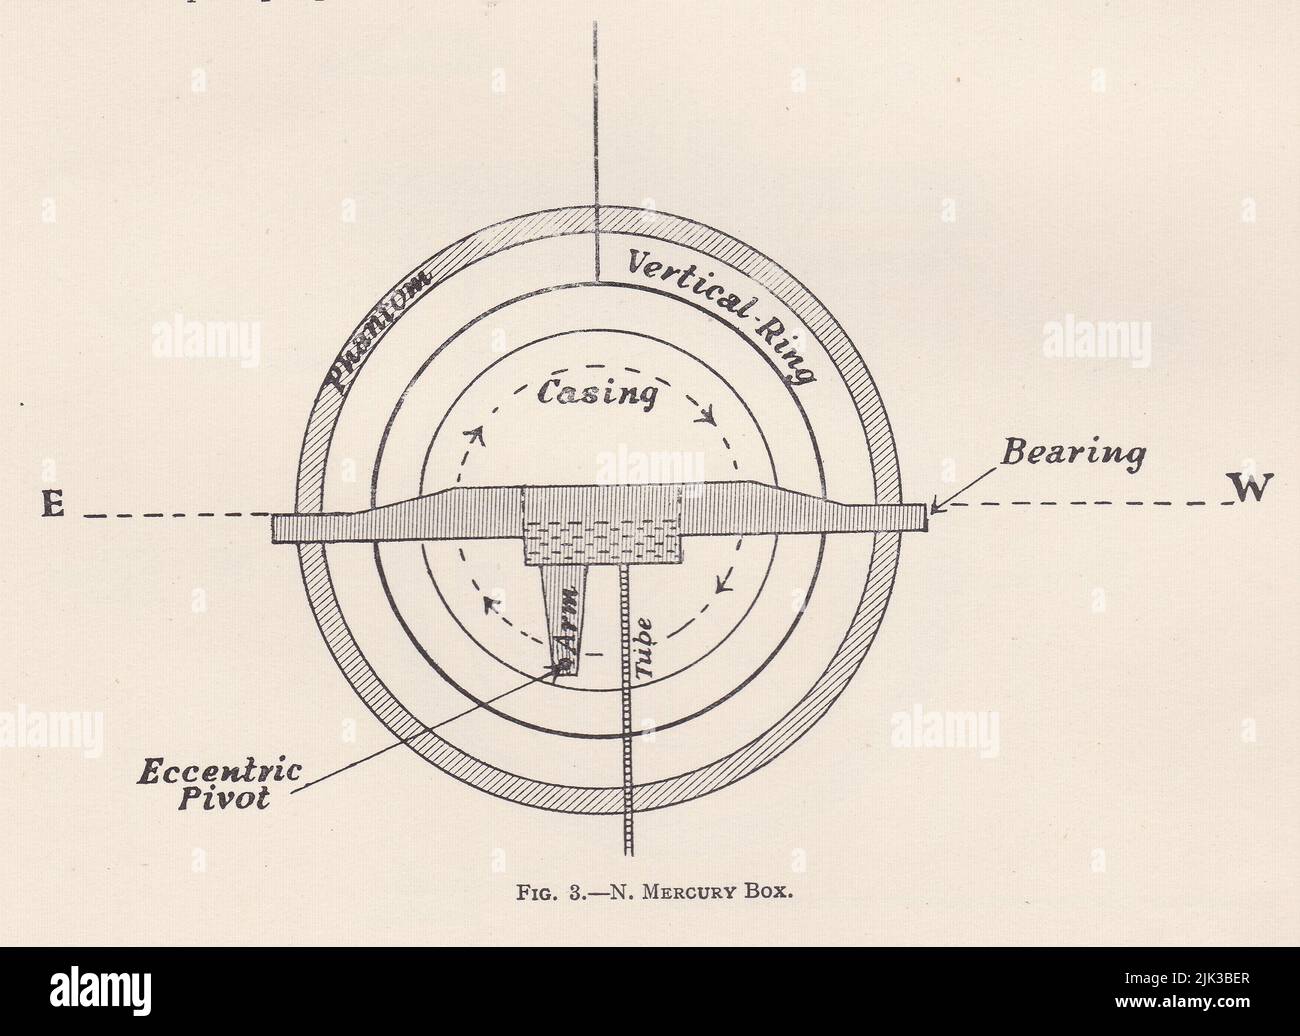 Vintage diagram of a compass - N. Mercury Box. Stock Photo